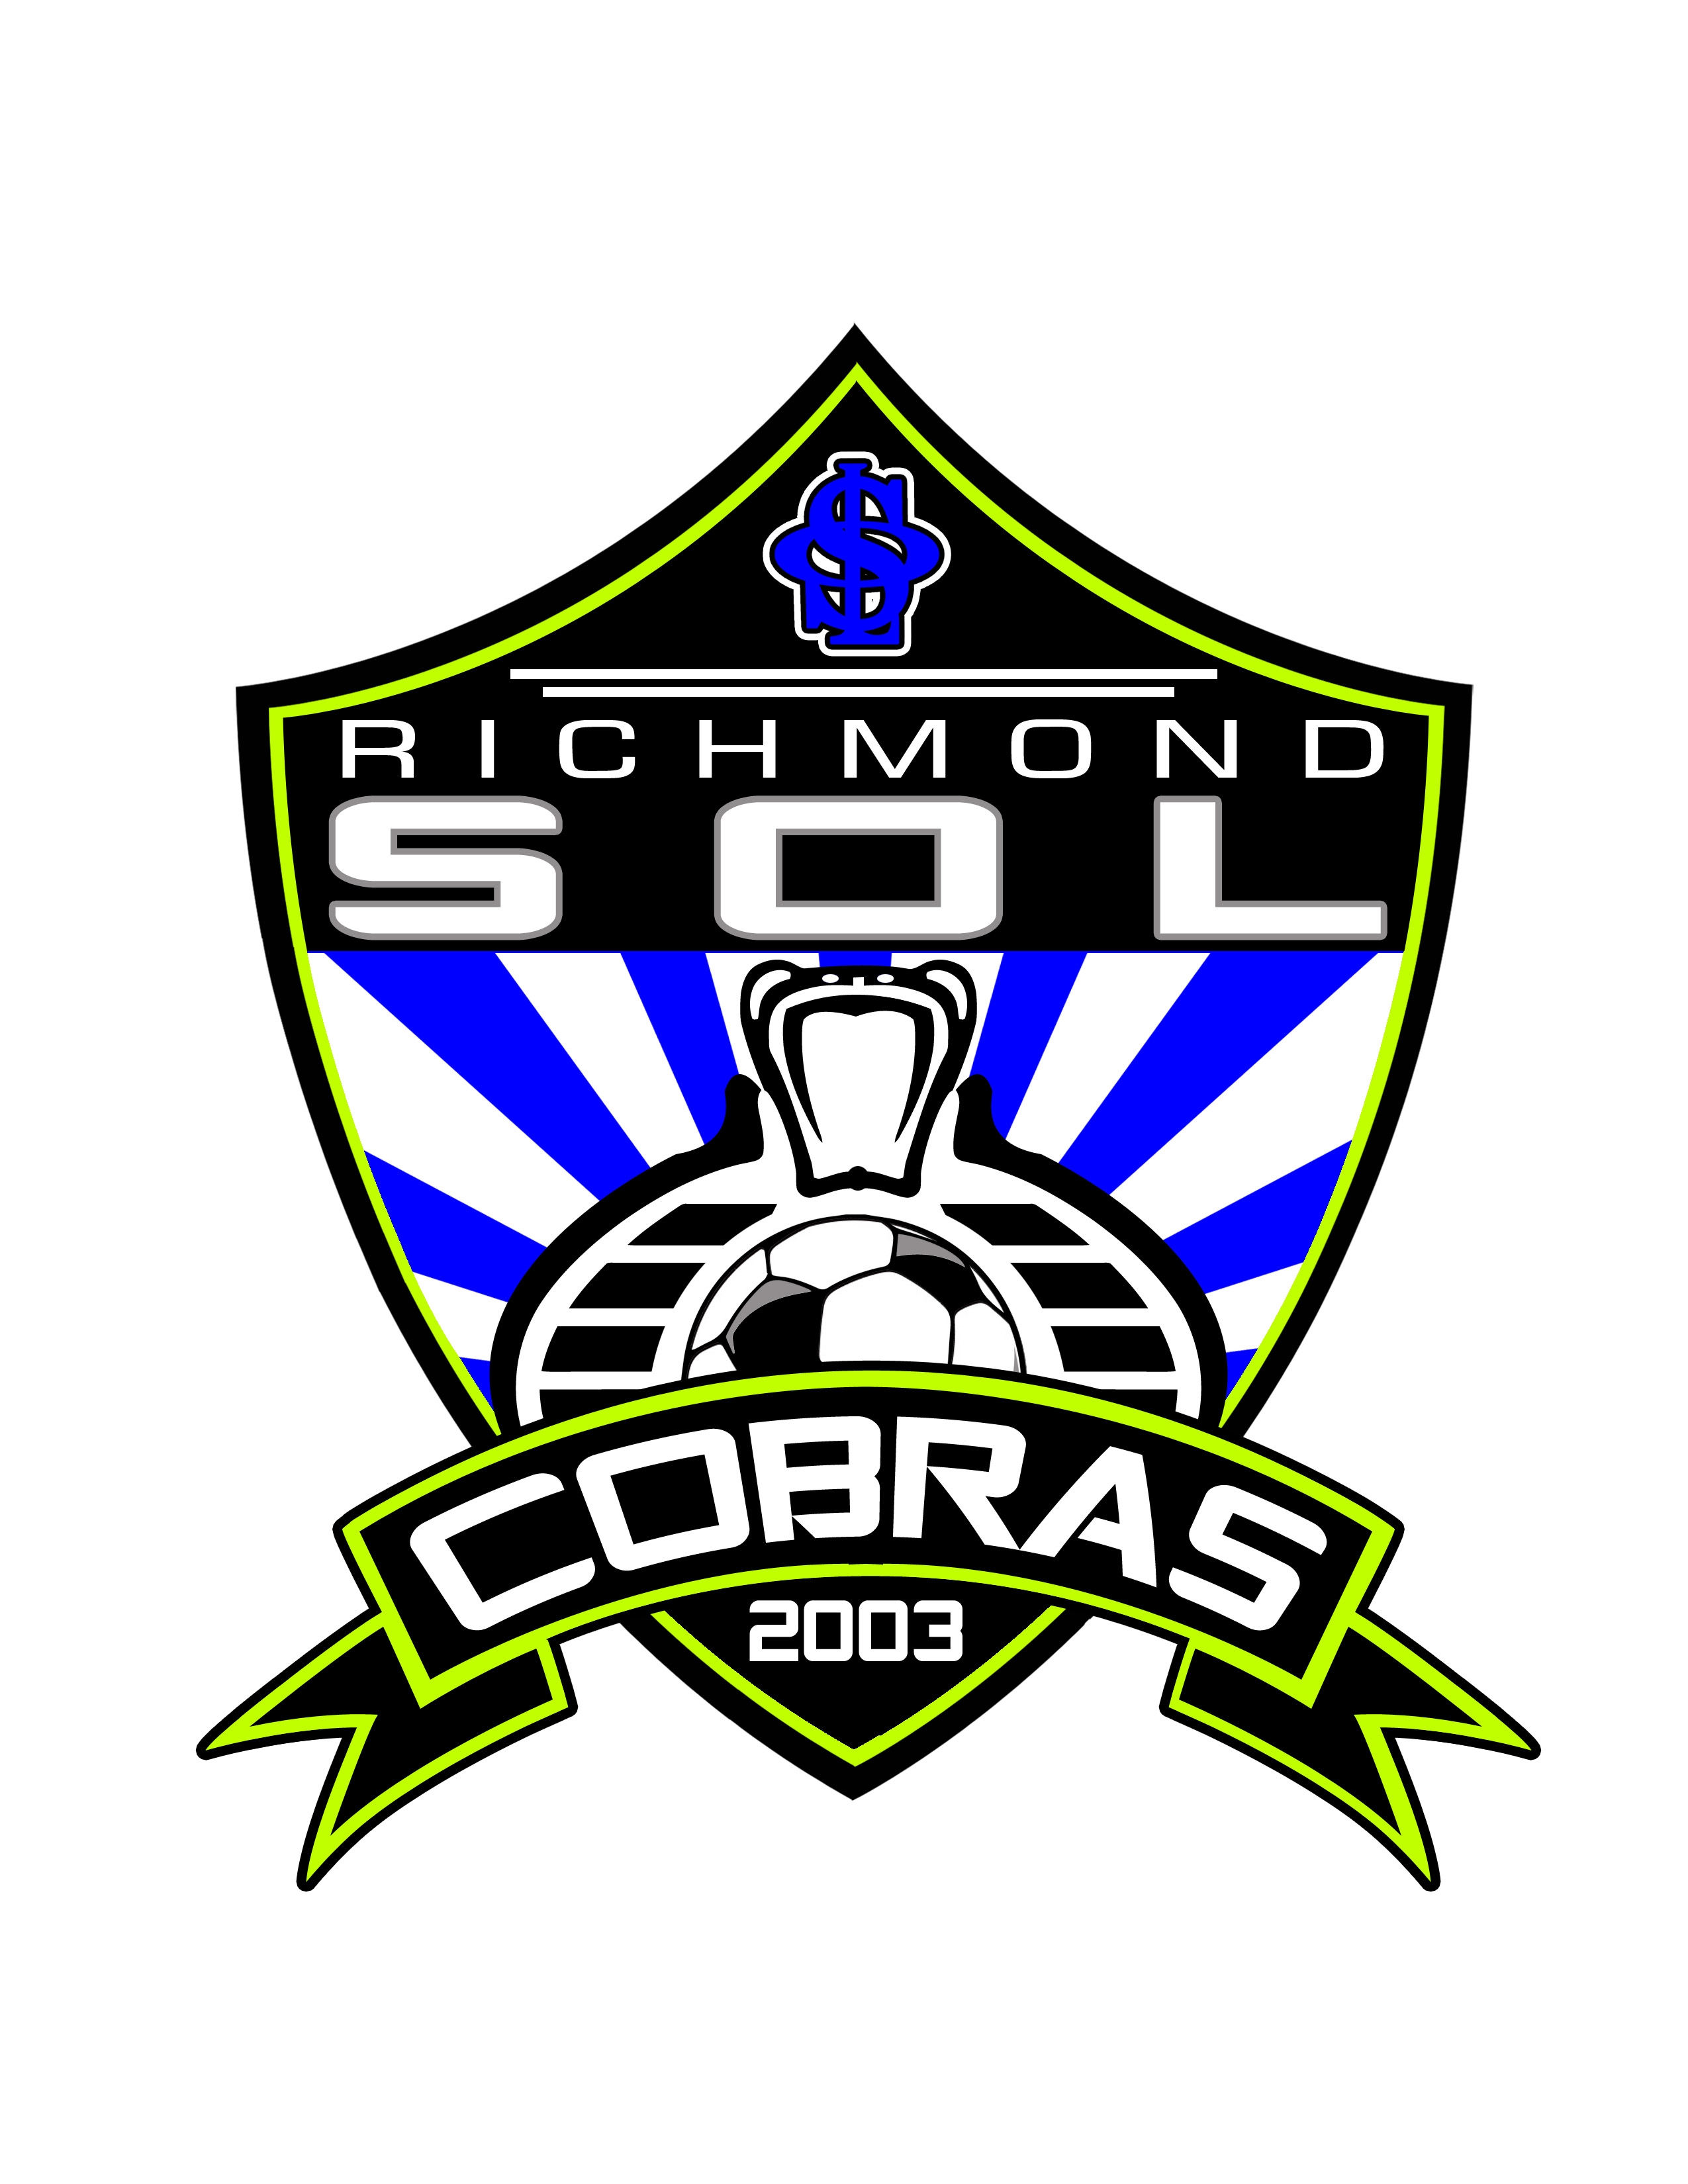 Richmond Sol Cobras team badge